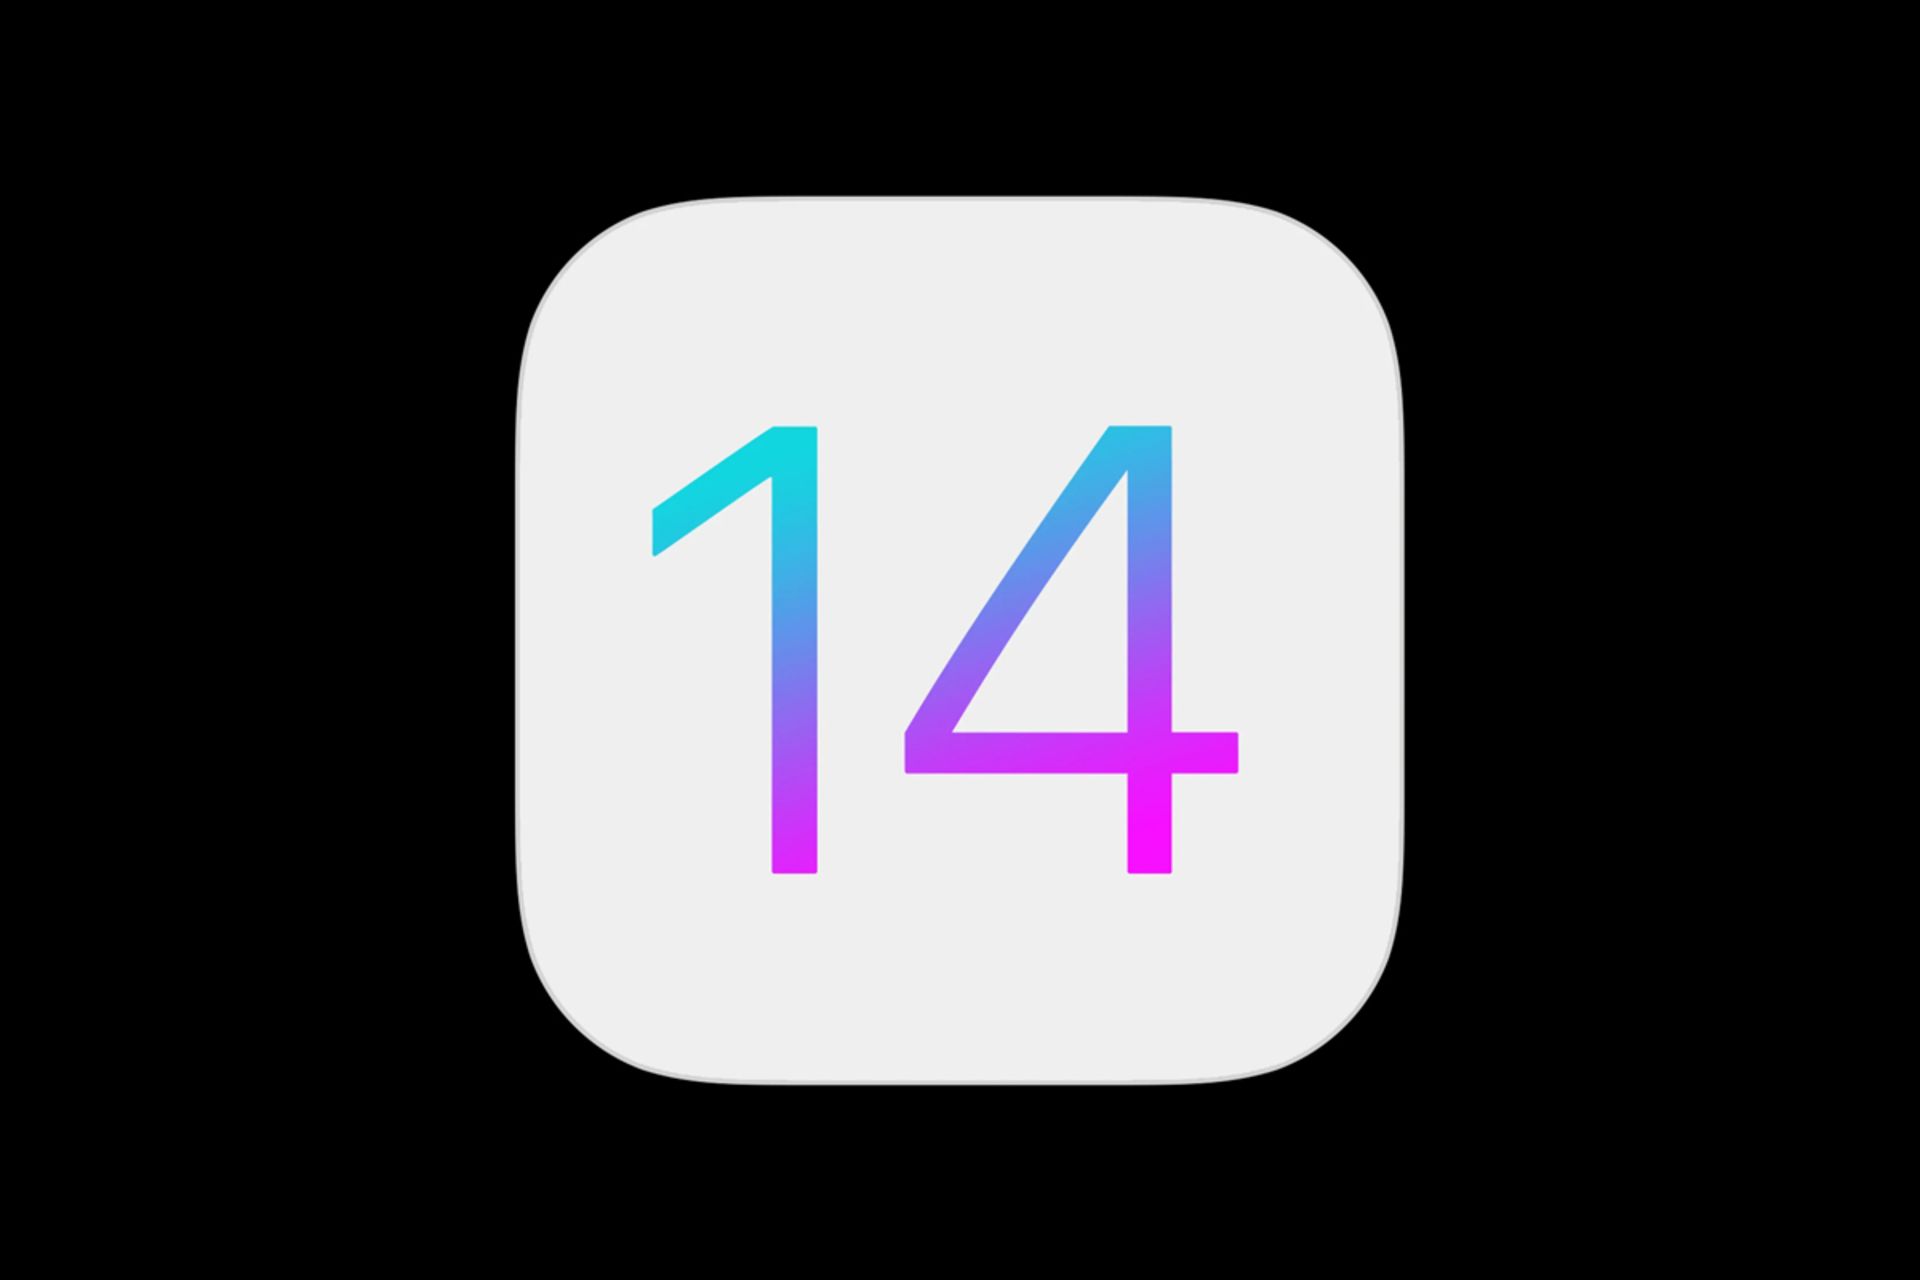 لوگو آی او اس 14 اپل / Apple iOS 14 رنگ سفید و صورتی و آبی پس زمینه مشکی